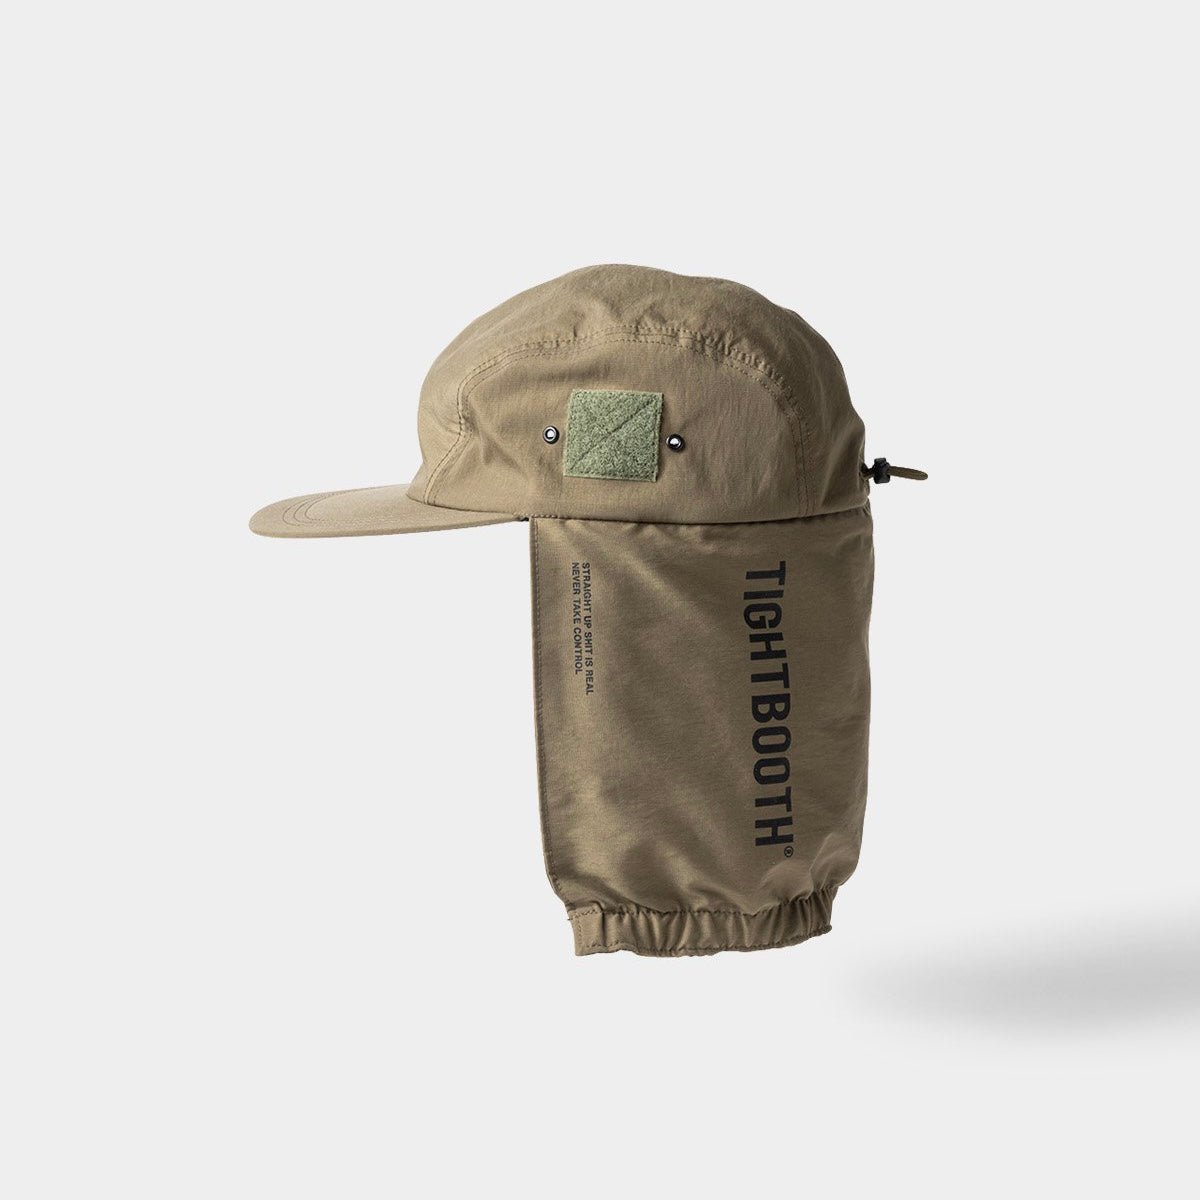 TIGHTBOOTH SUNSHADE CAMP CAP